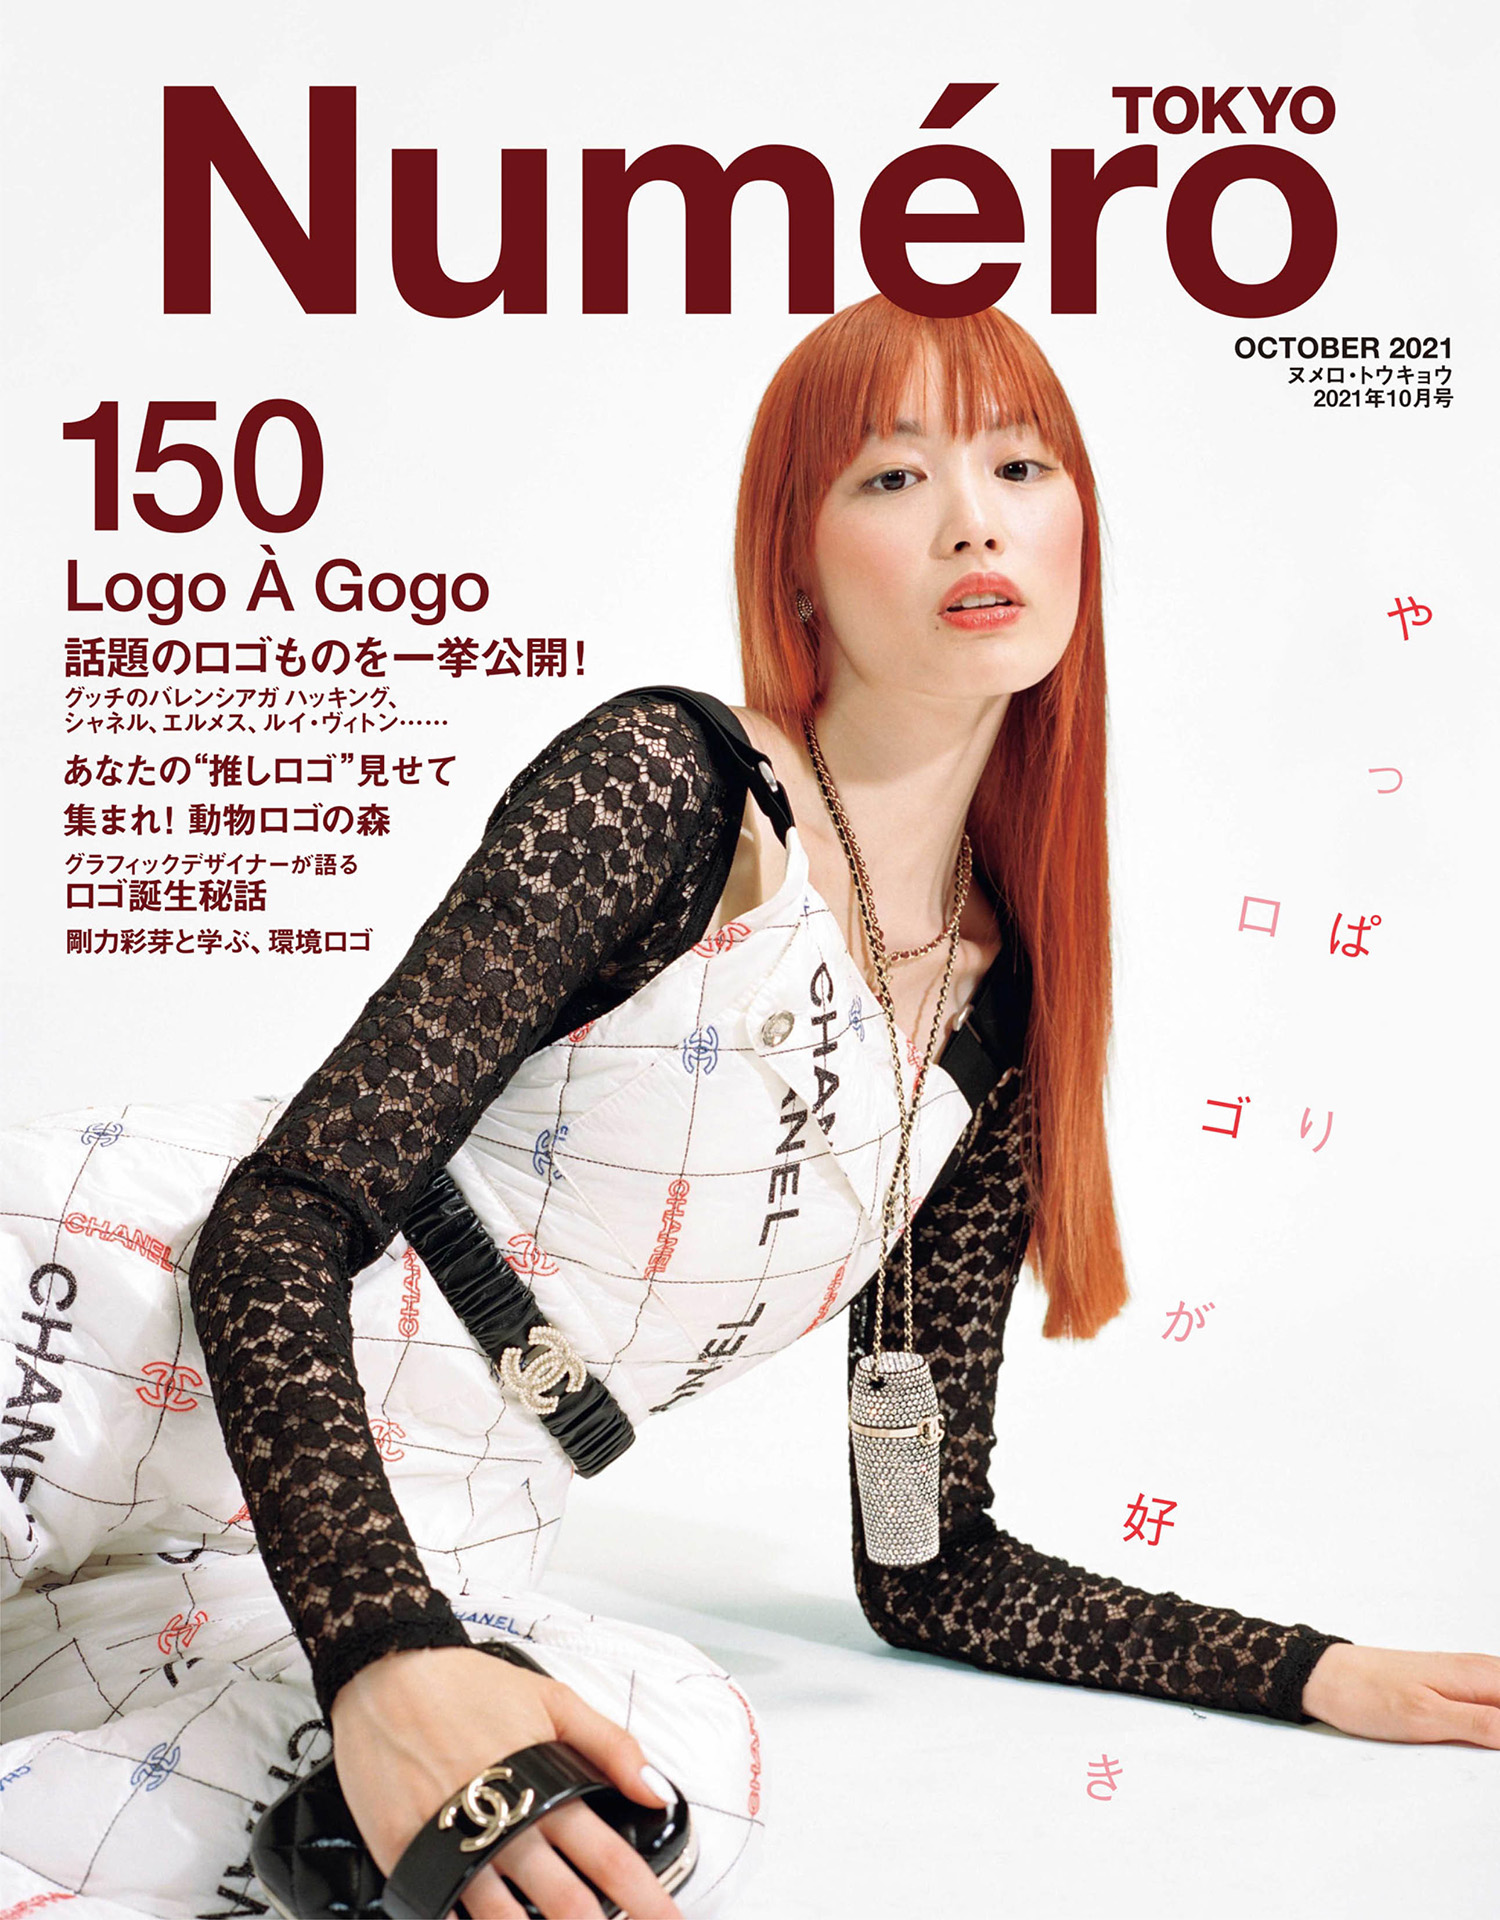 Fernanda Ly covers Numéro Tokyo October 2021 by Carlotta Kohl